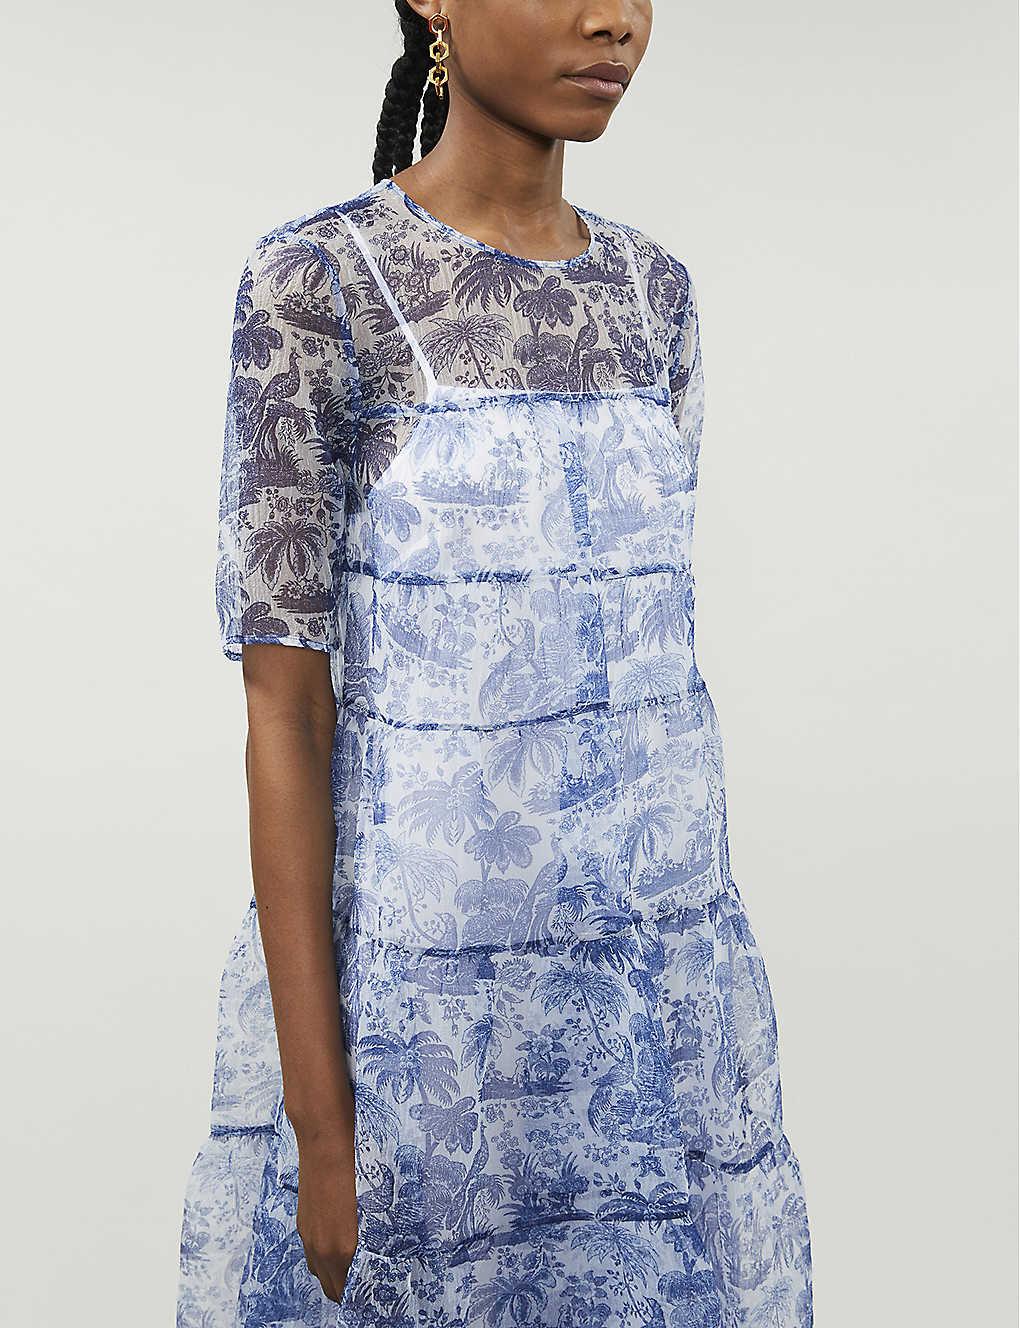 STAUD Toile-print Sheer Organza Dress in Blue - Lyst